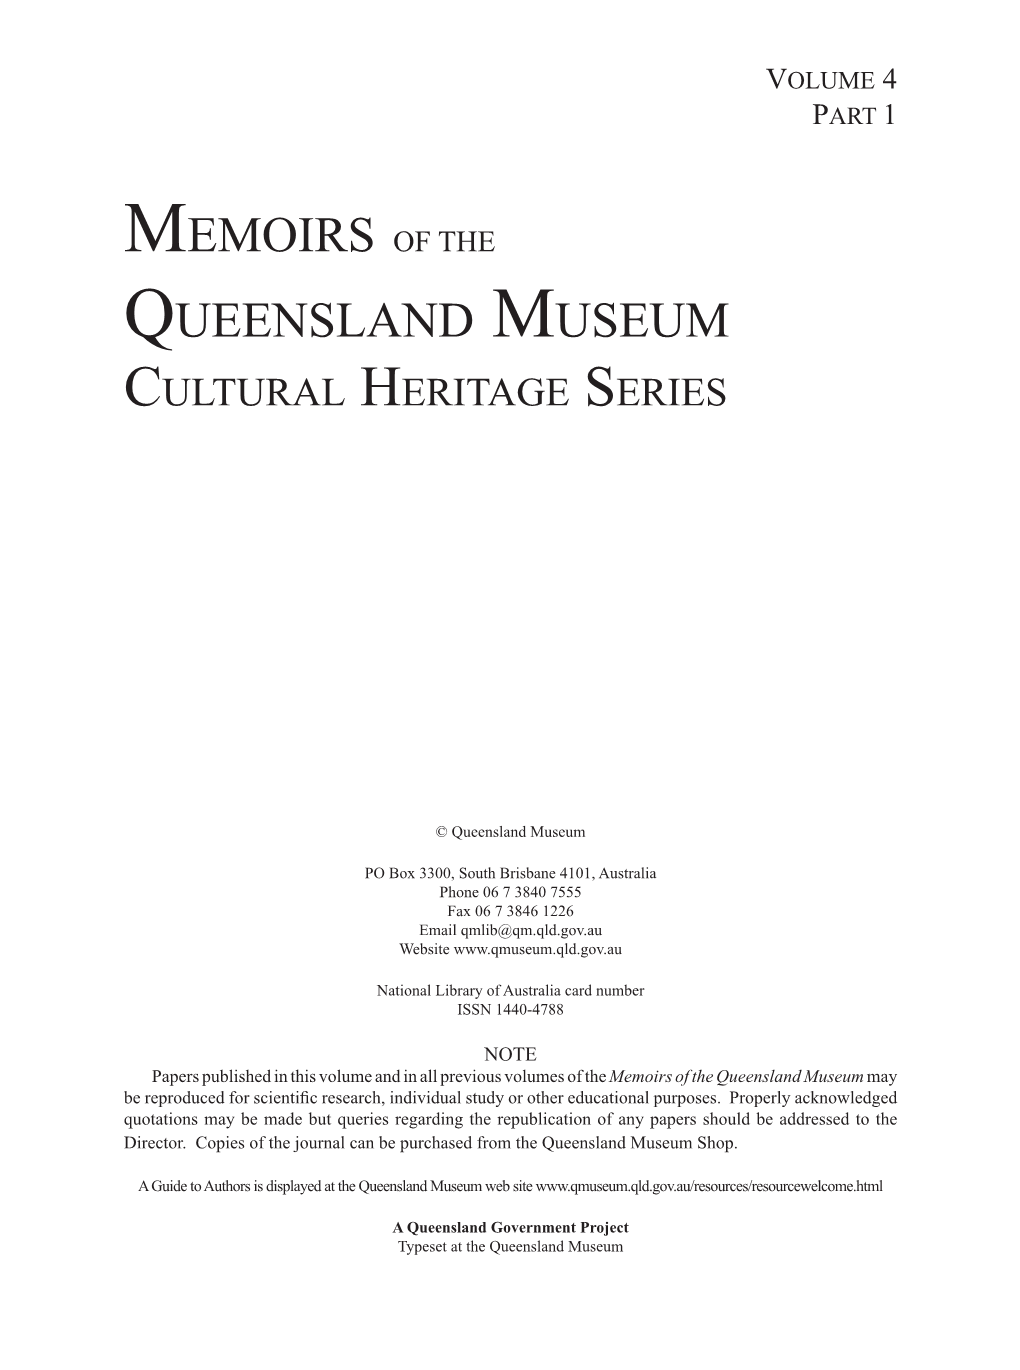 Memoirs of the Queensland Museum Cultural Heritage Series